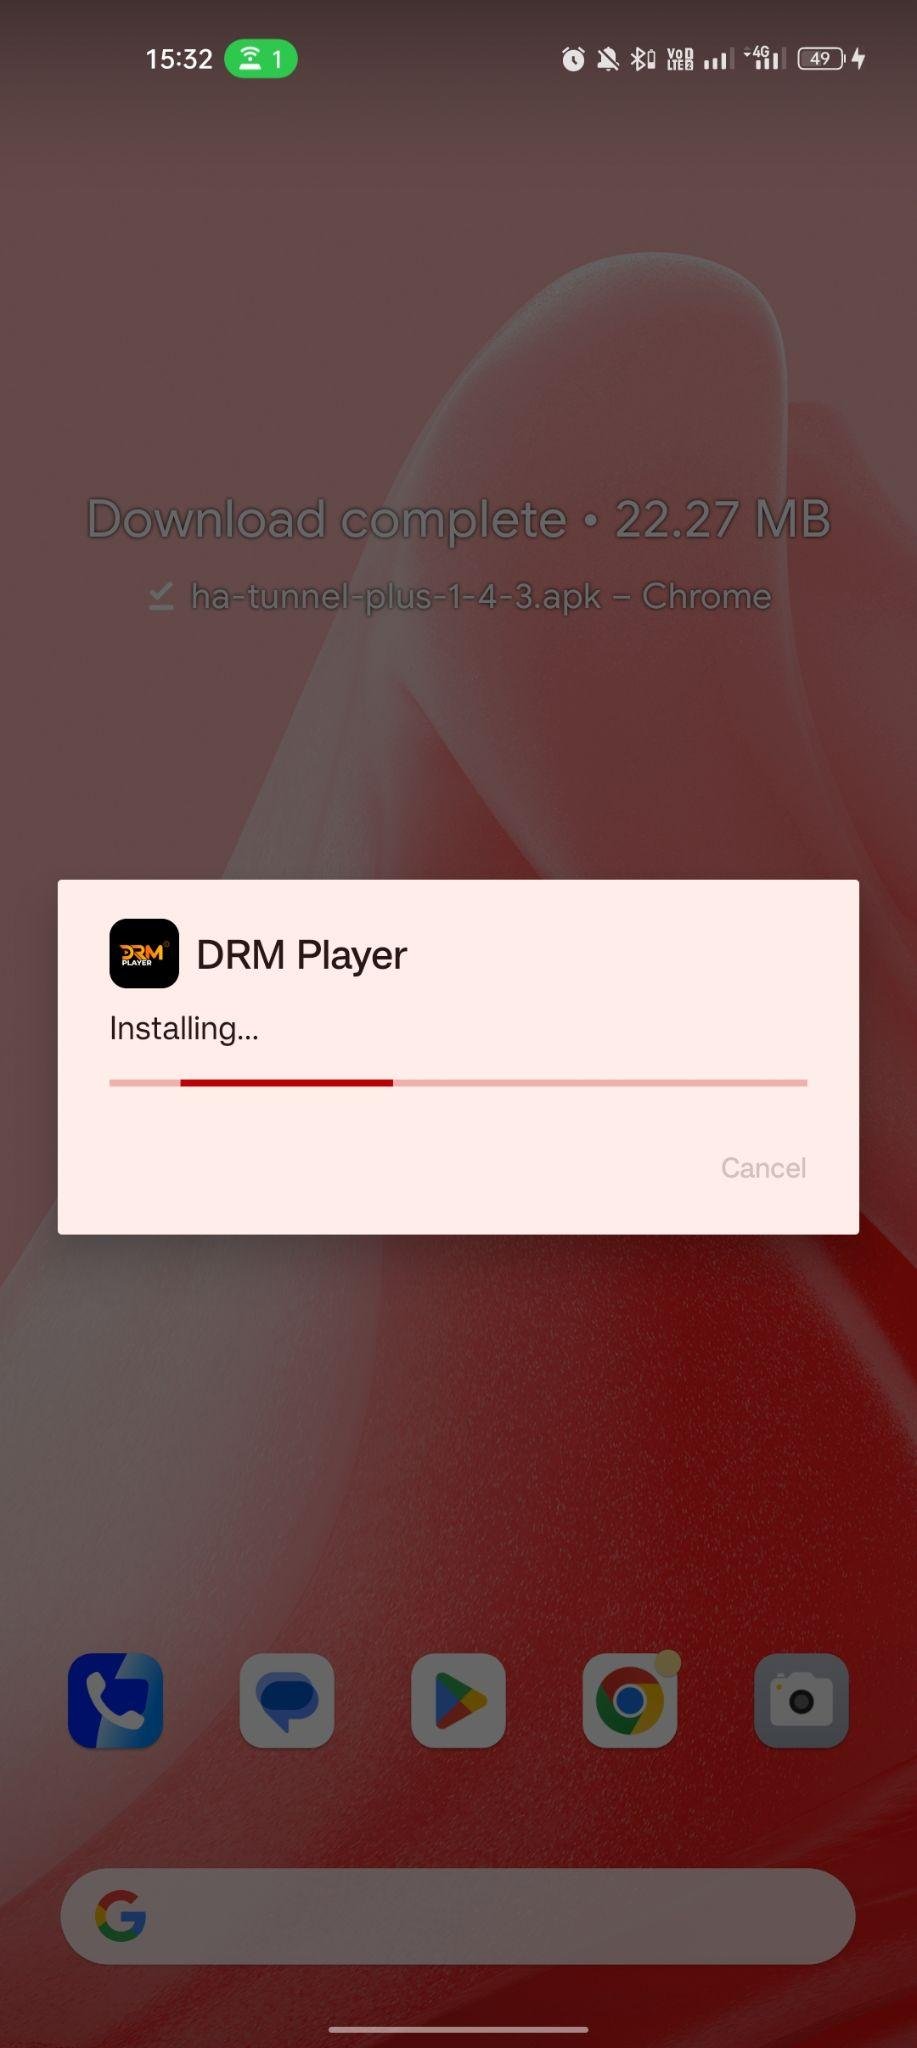 DRM Player apk installing